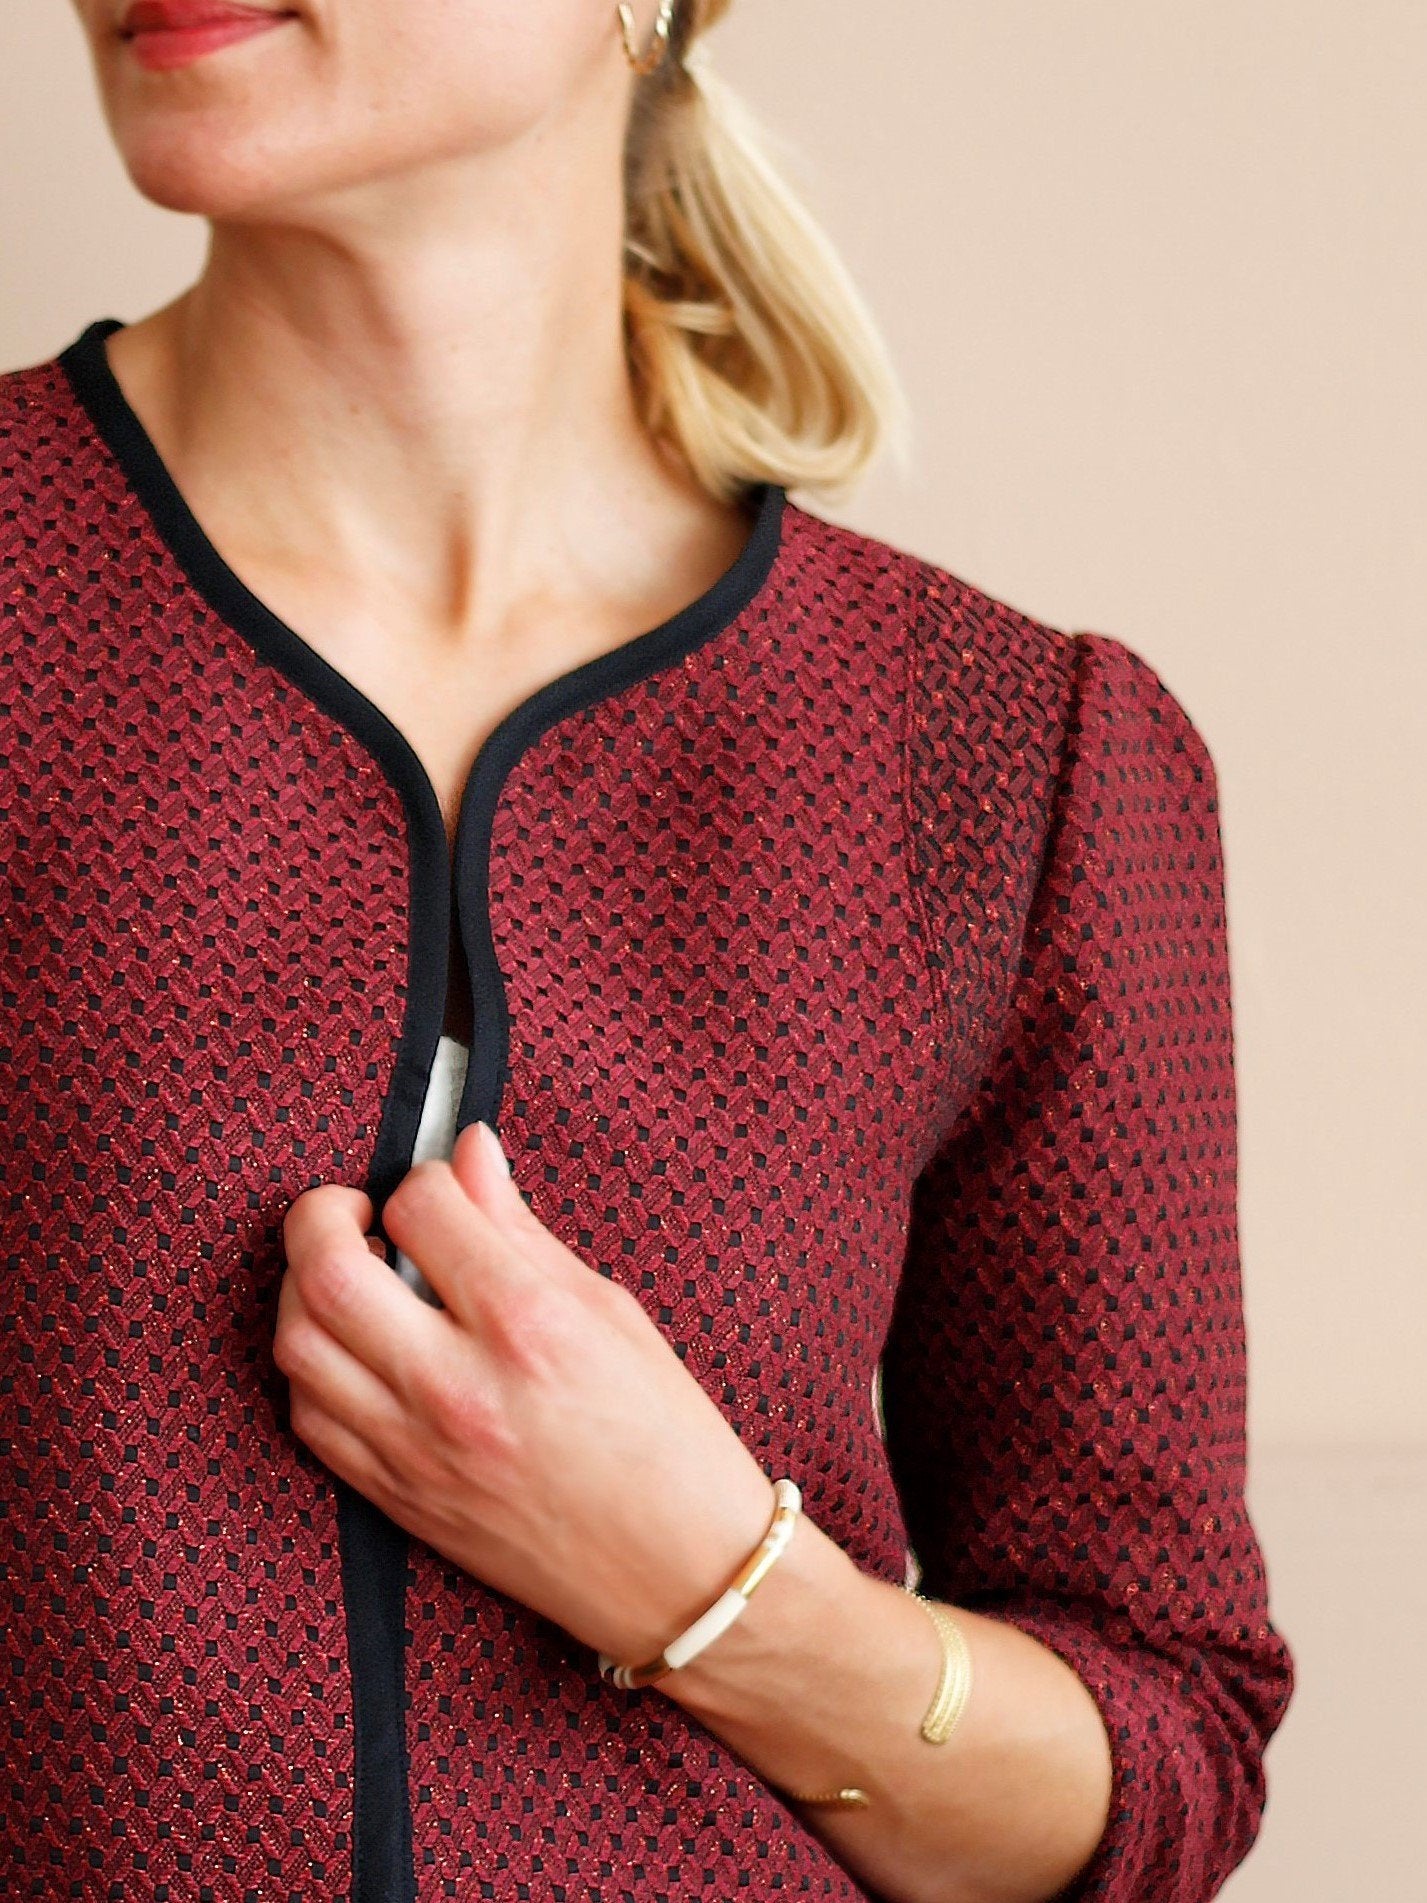 Gaby Jacket - pattern Couture PDF or paper - Joli Lab